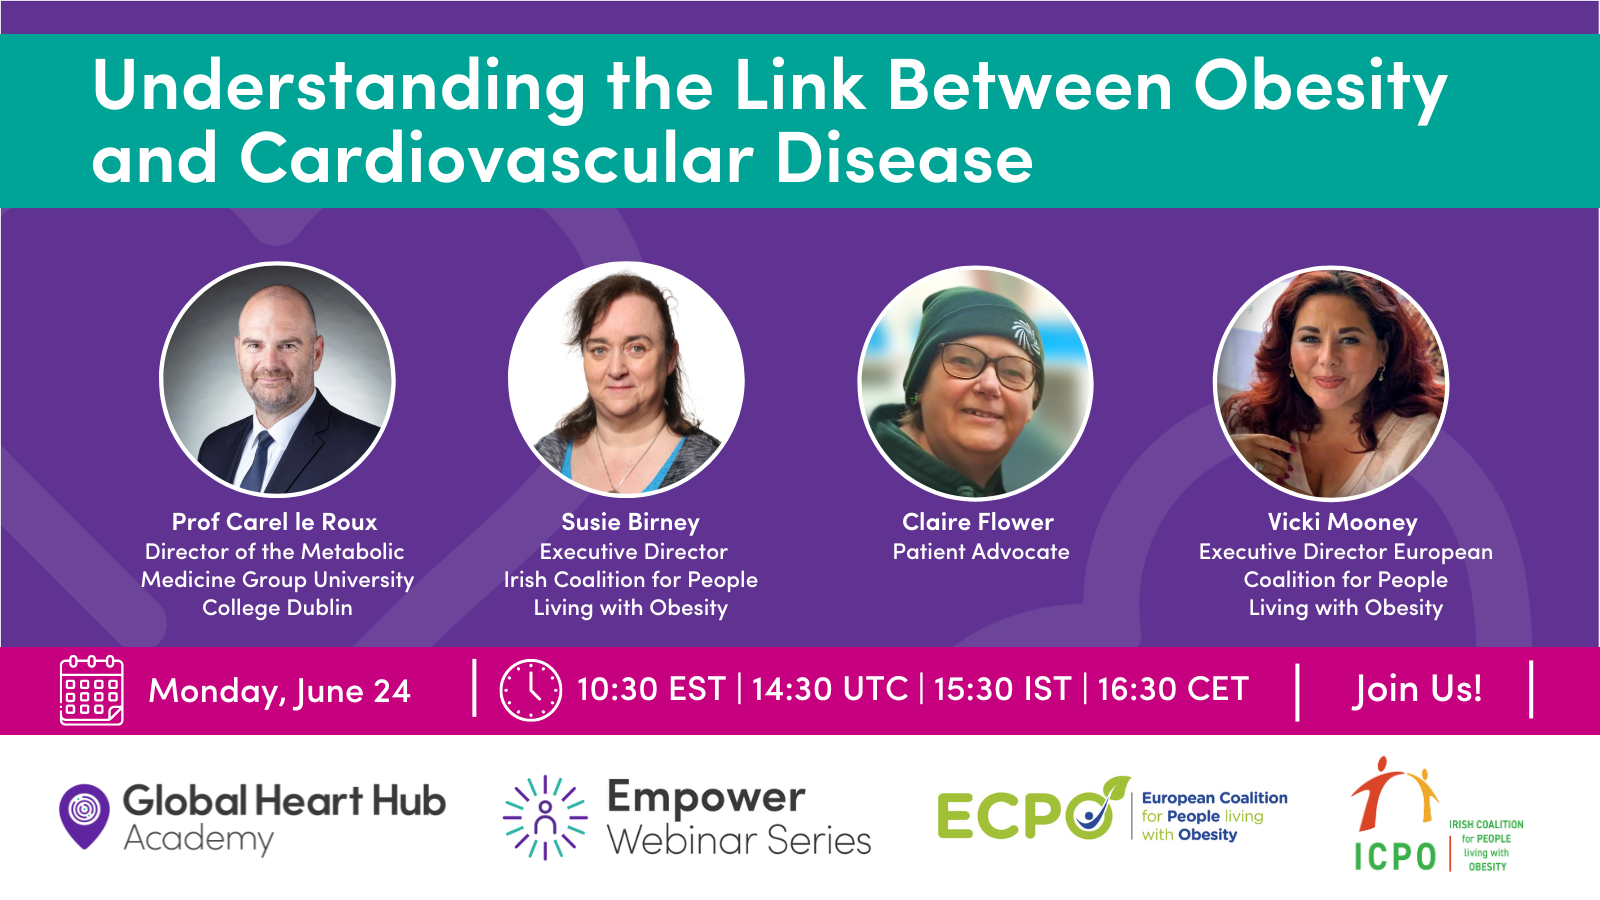 Global Heart Hub Empower Webinar: Understanding the Link Between Obesity and Cardiovascular Disease